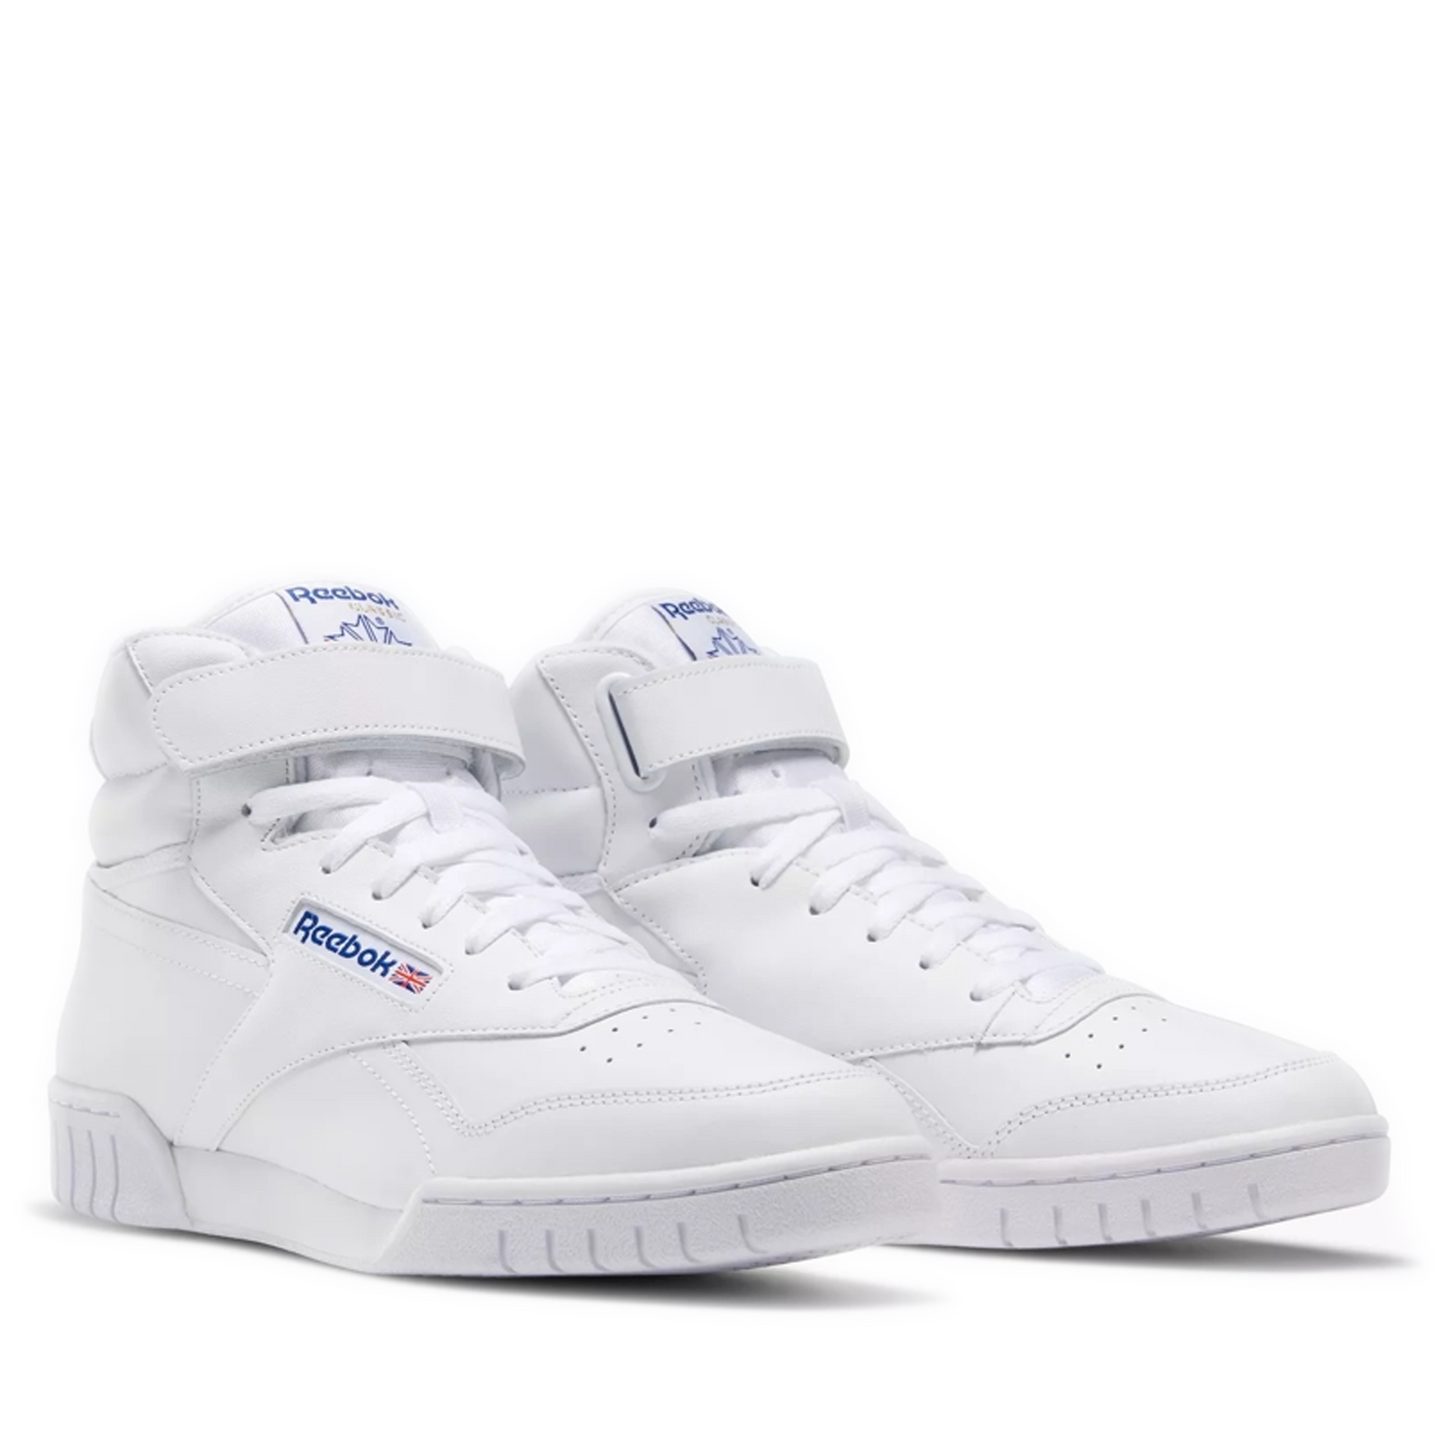 Men's Reebok EX-O-FIT Hi Shoes - White